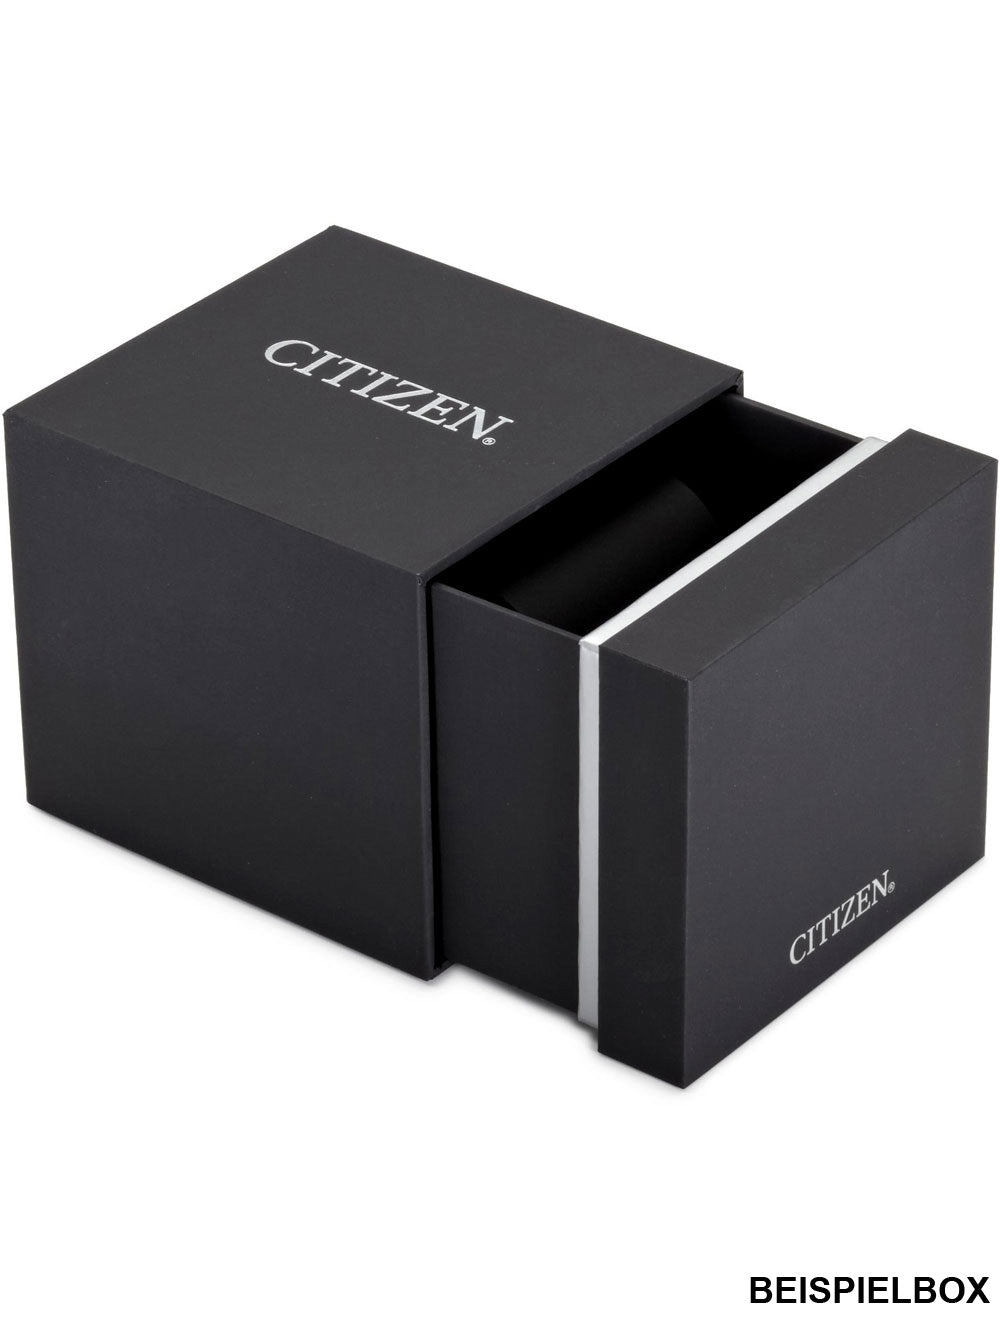 Citizen EE4033-87A Bluetooth Smart Watch Ladies 33mm 5ATM